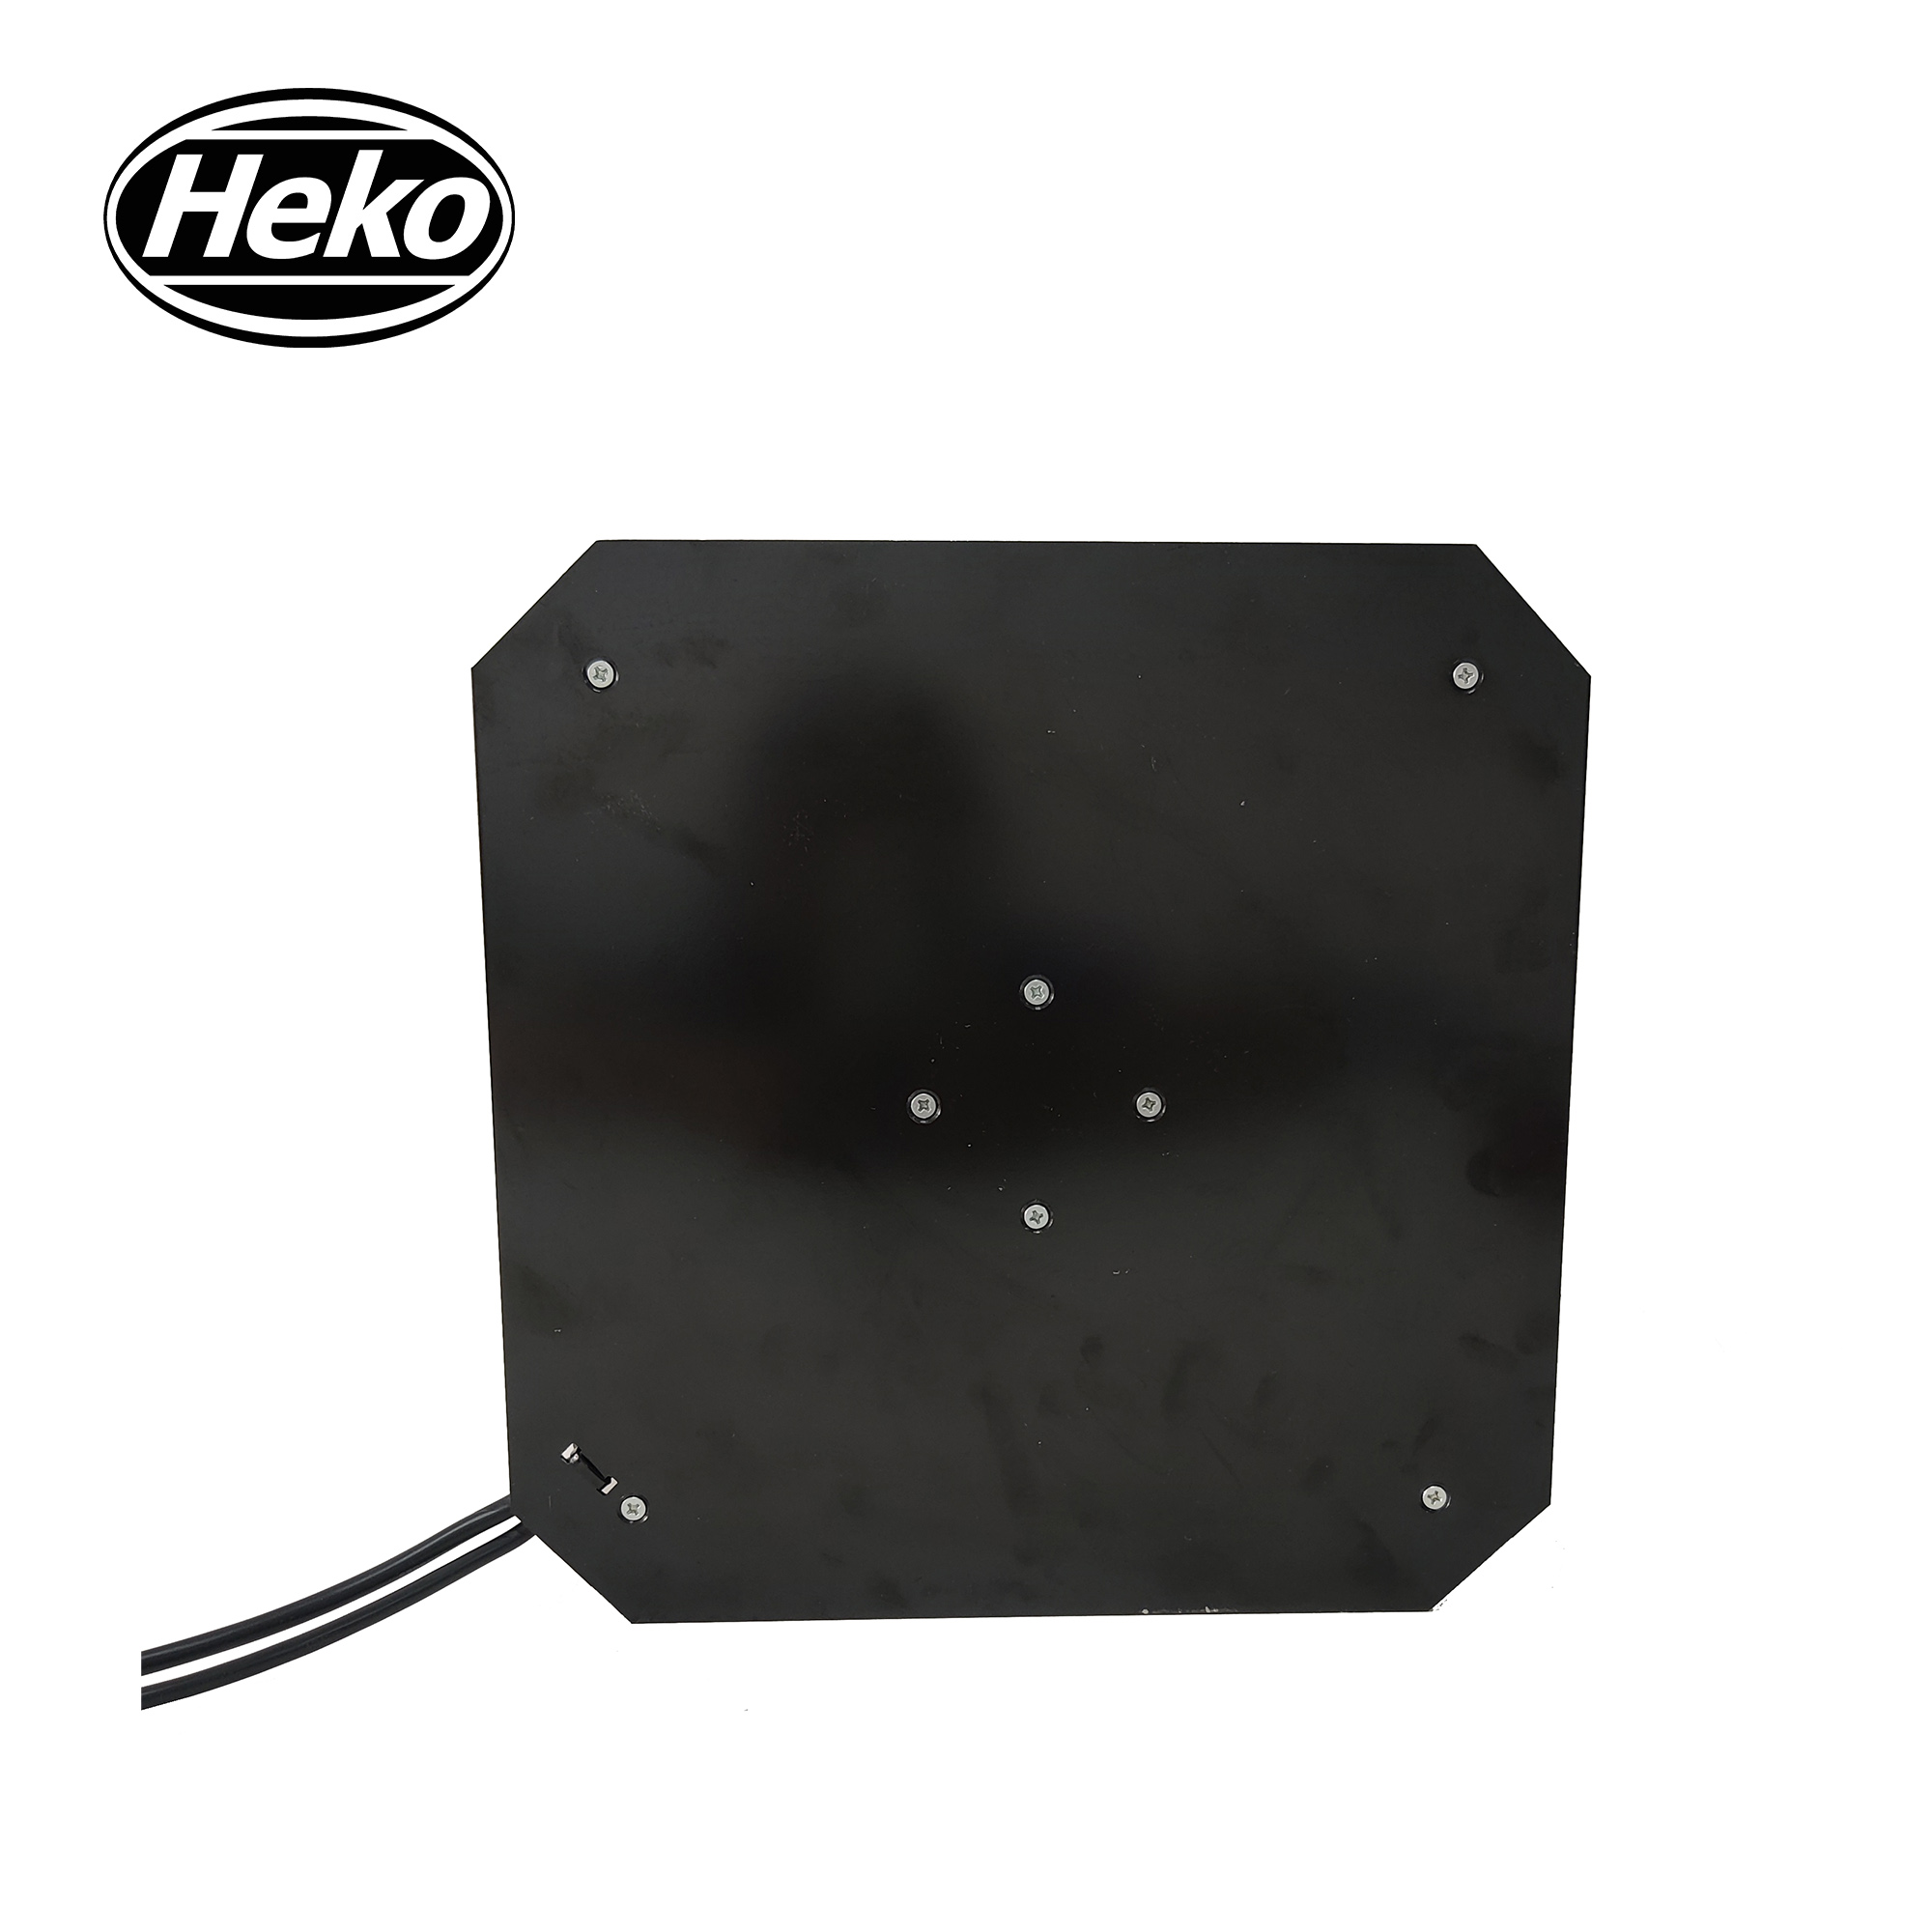 HEKO EC133mm 230VAC Backword Curved Centrifugal Blower Fan with bracket